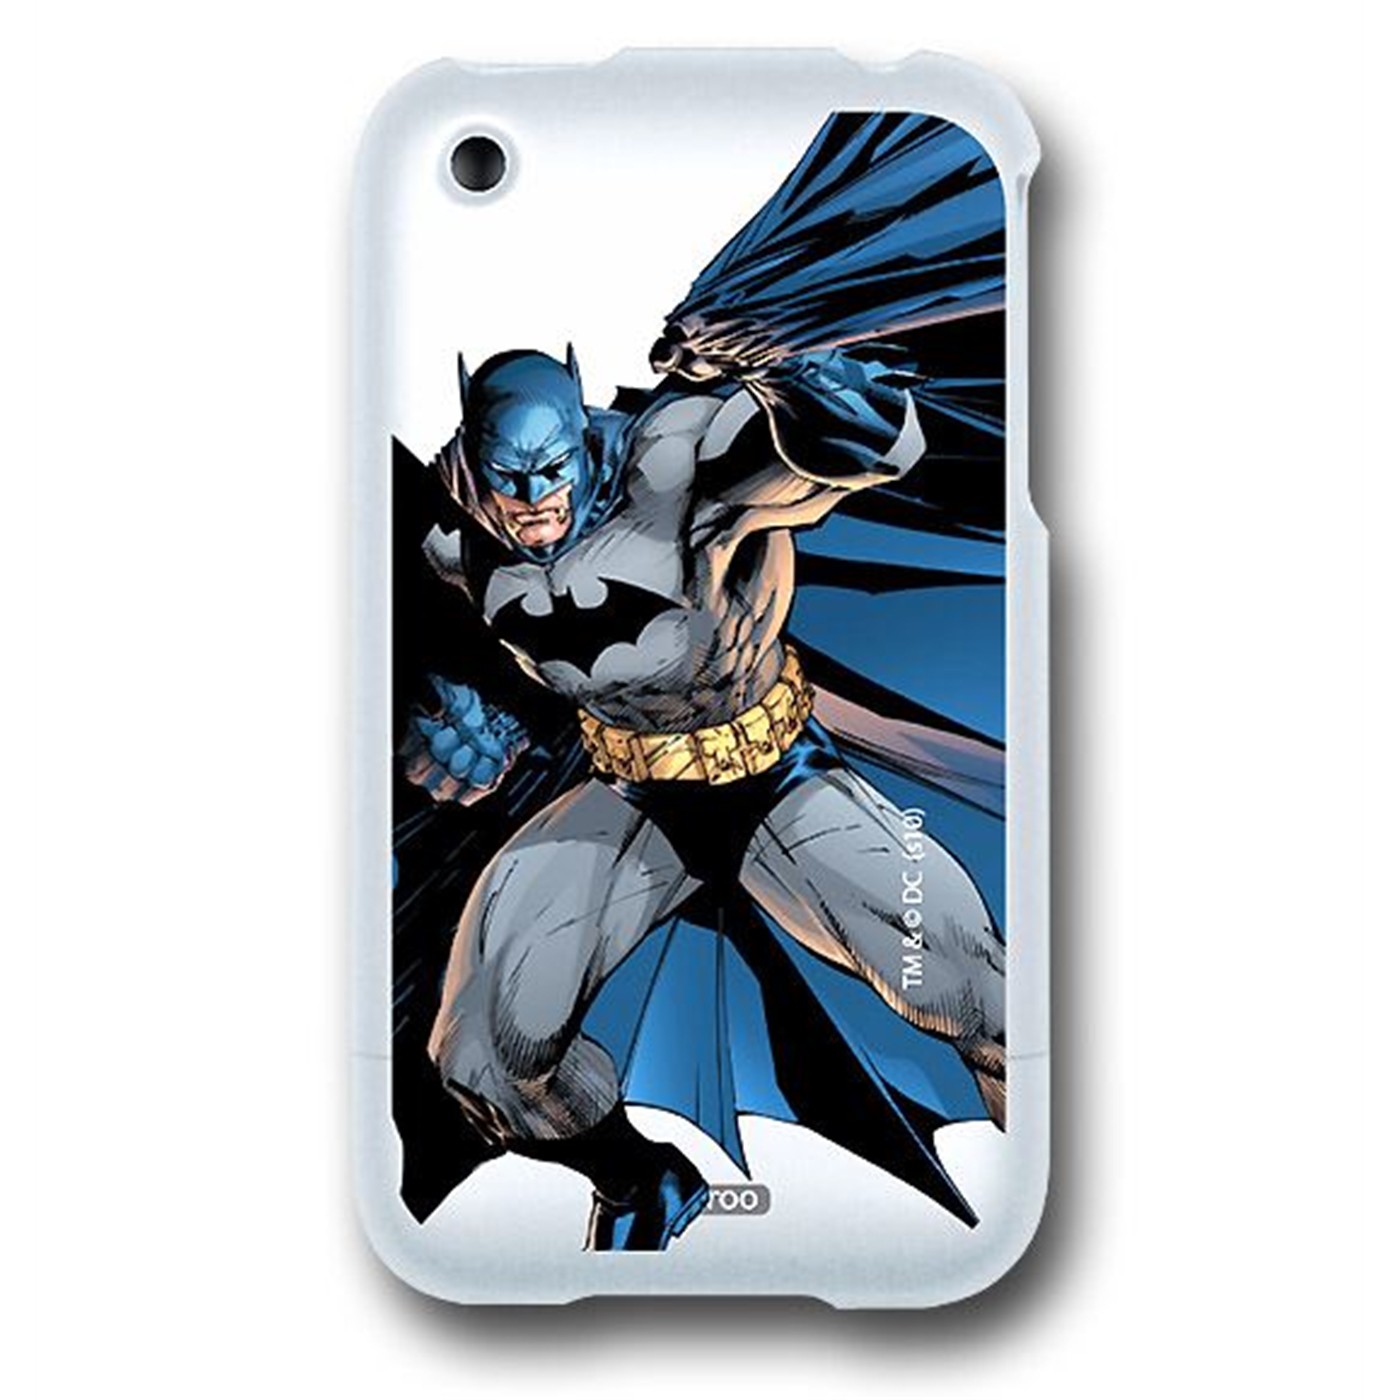 Batman Hero iPhone 3 Slider Case